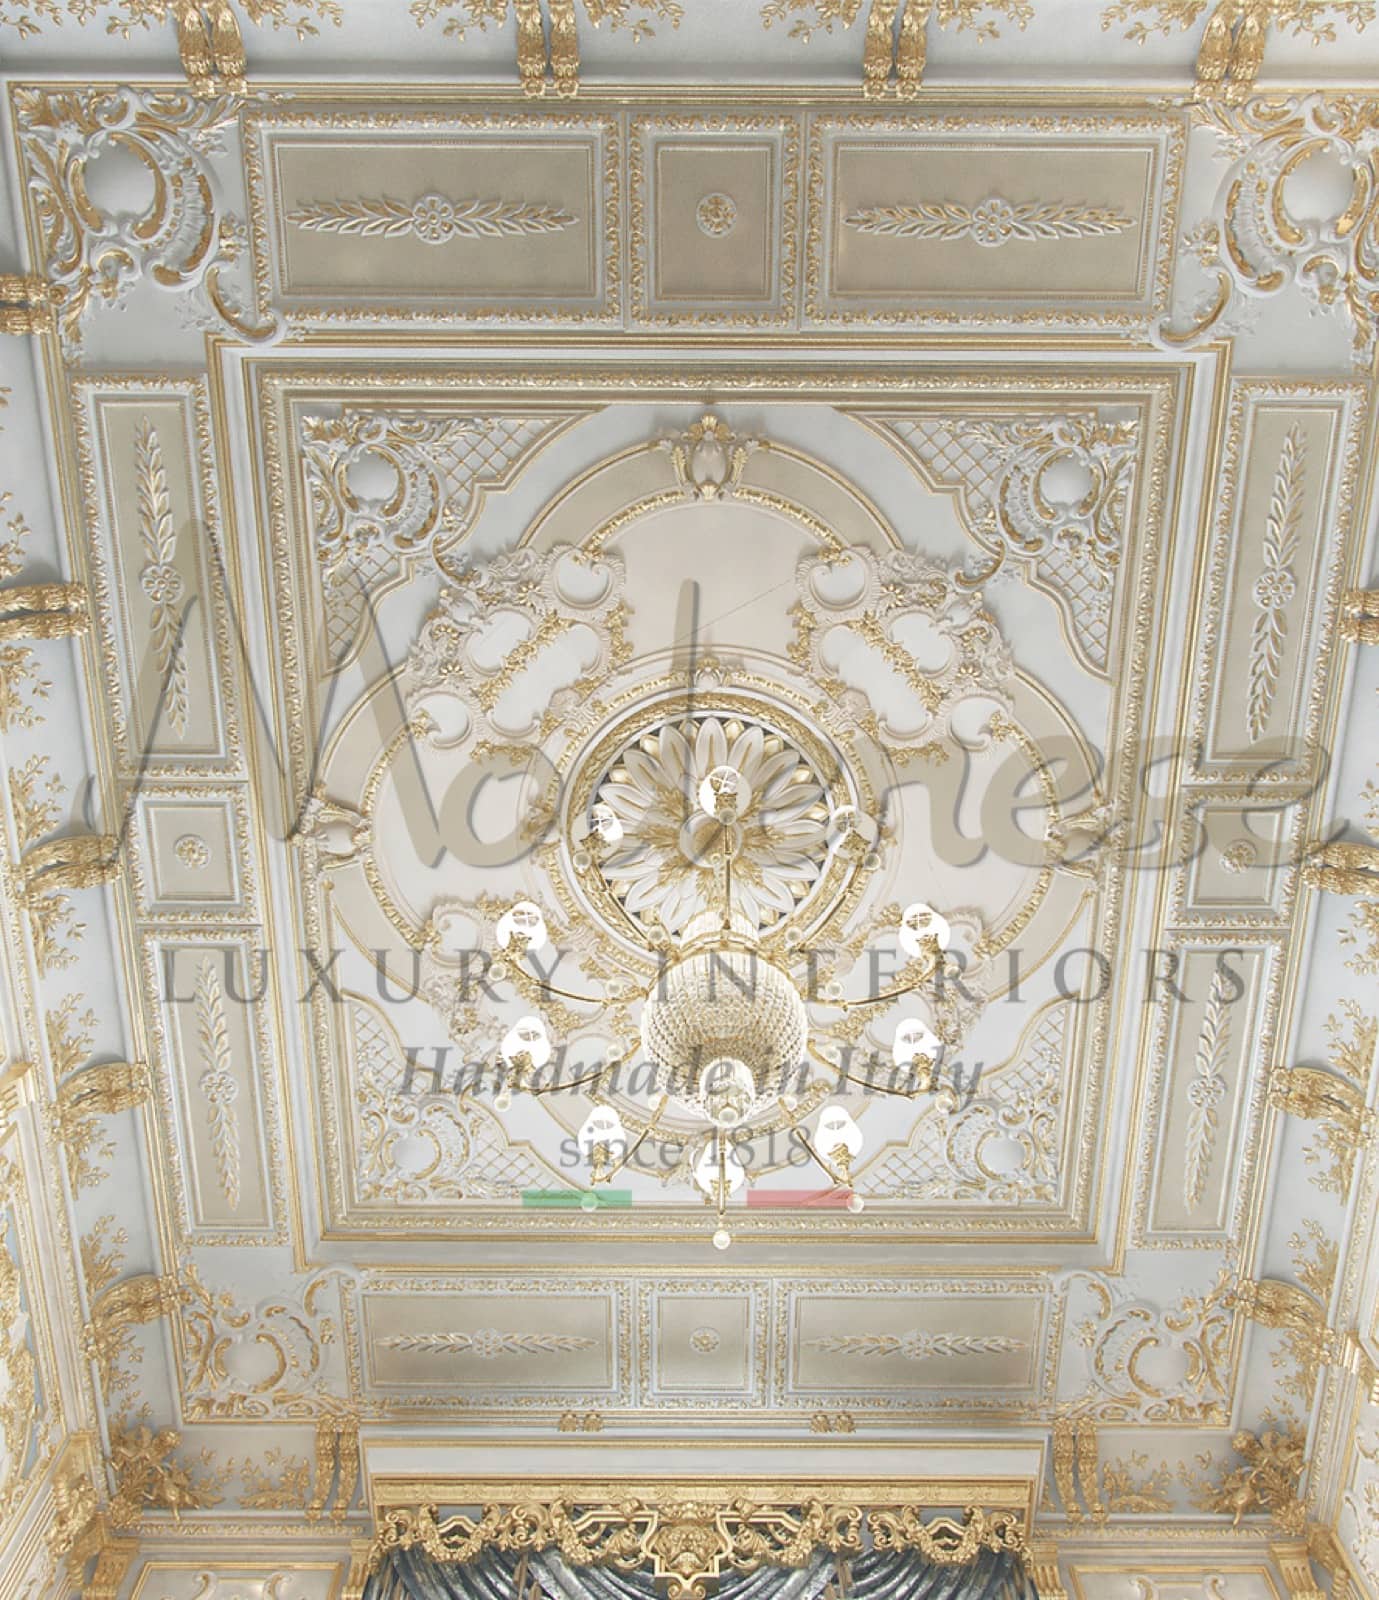 carved wood ceiling gold details gold leaf application handmade baroque classic interior design ideas elegant style decoration luxury carving boiserie chandelier customized designs custom made taste bespoke villa palace